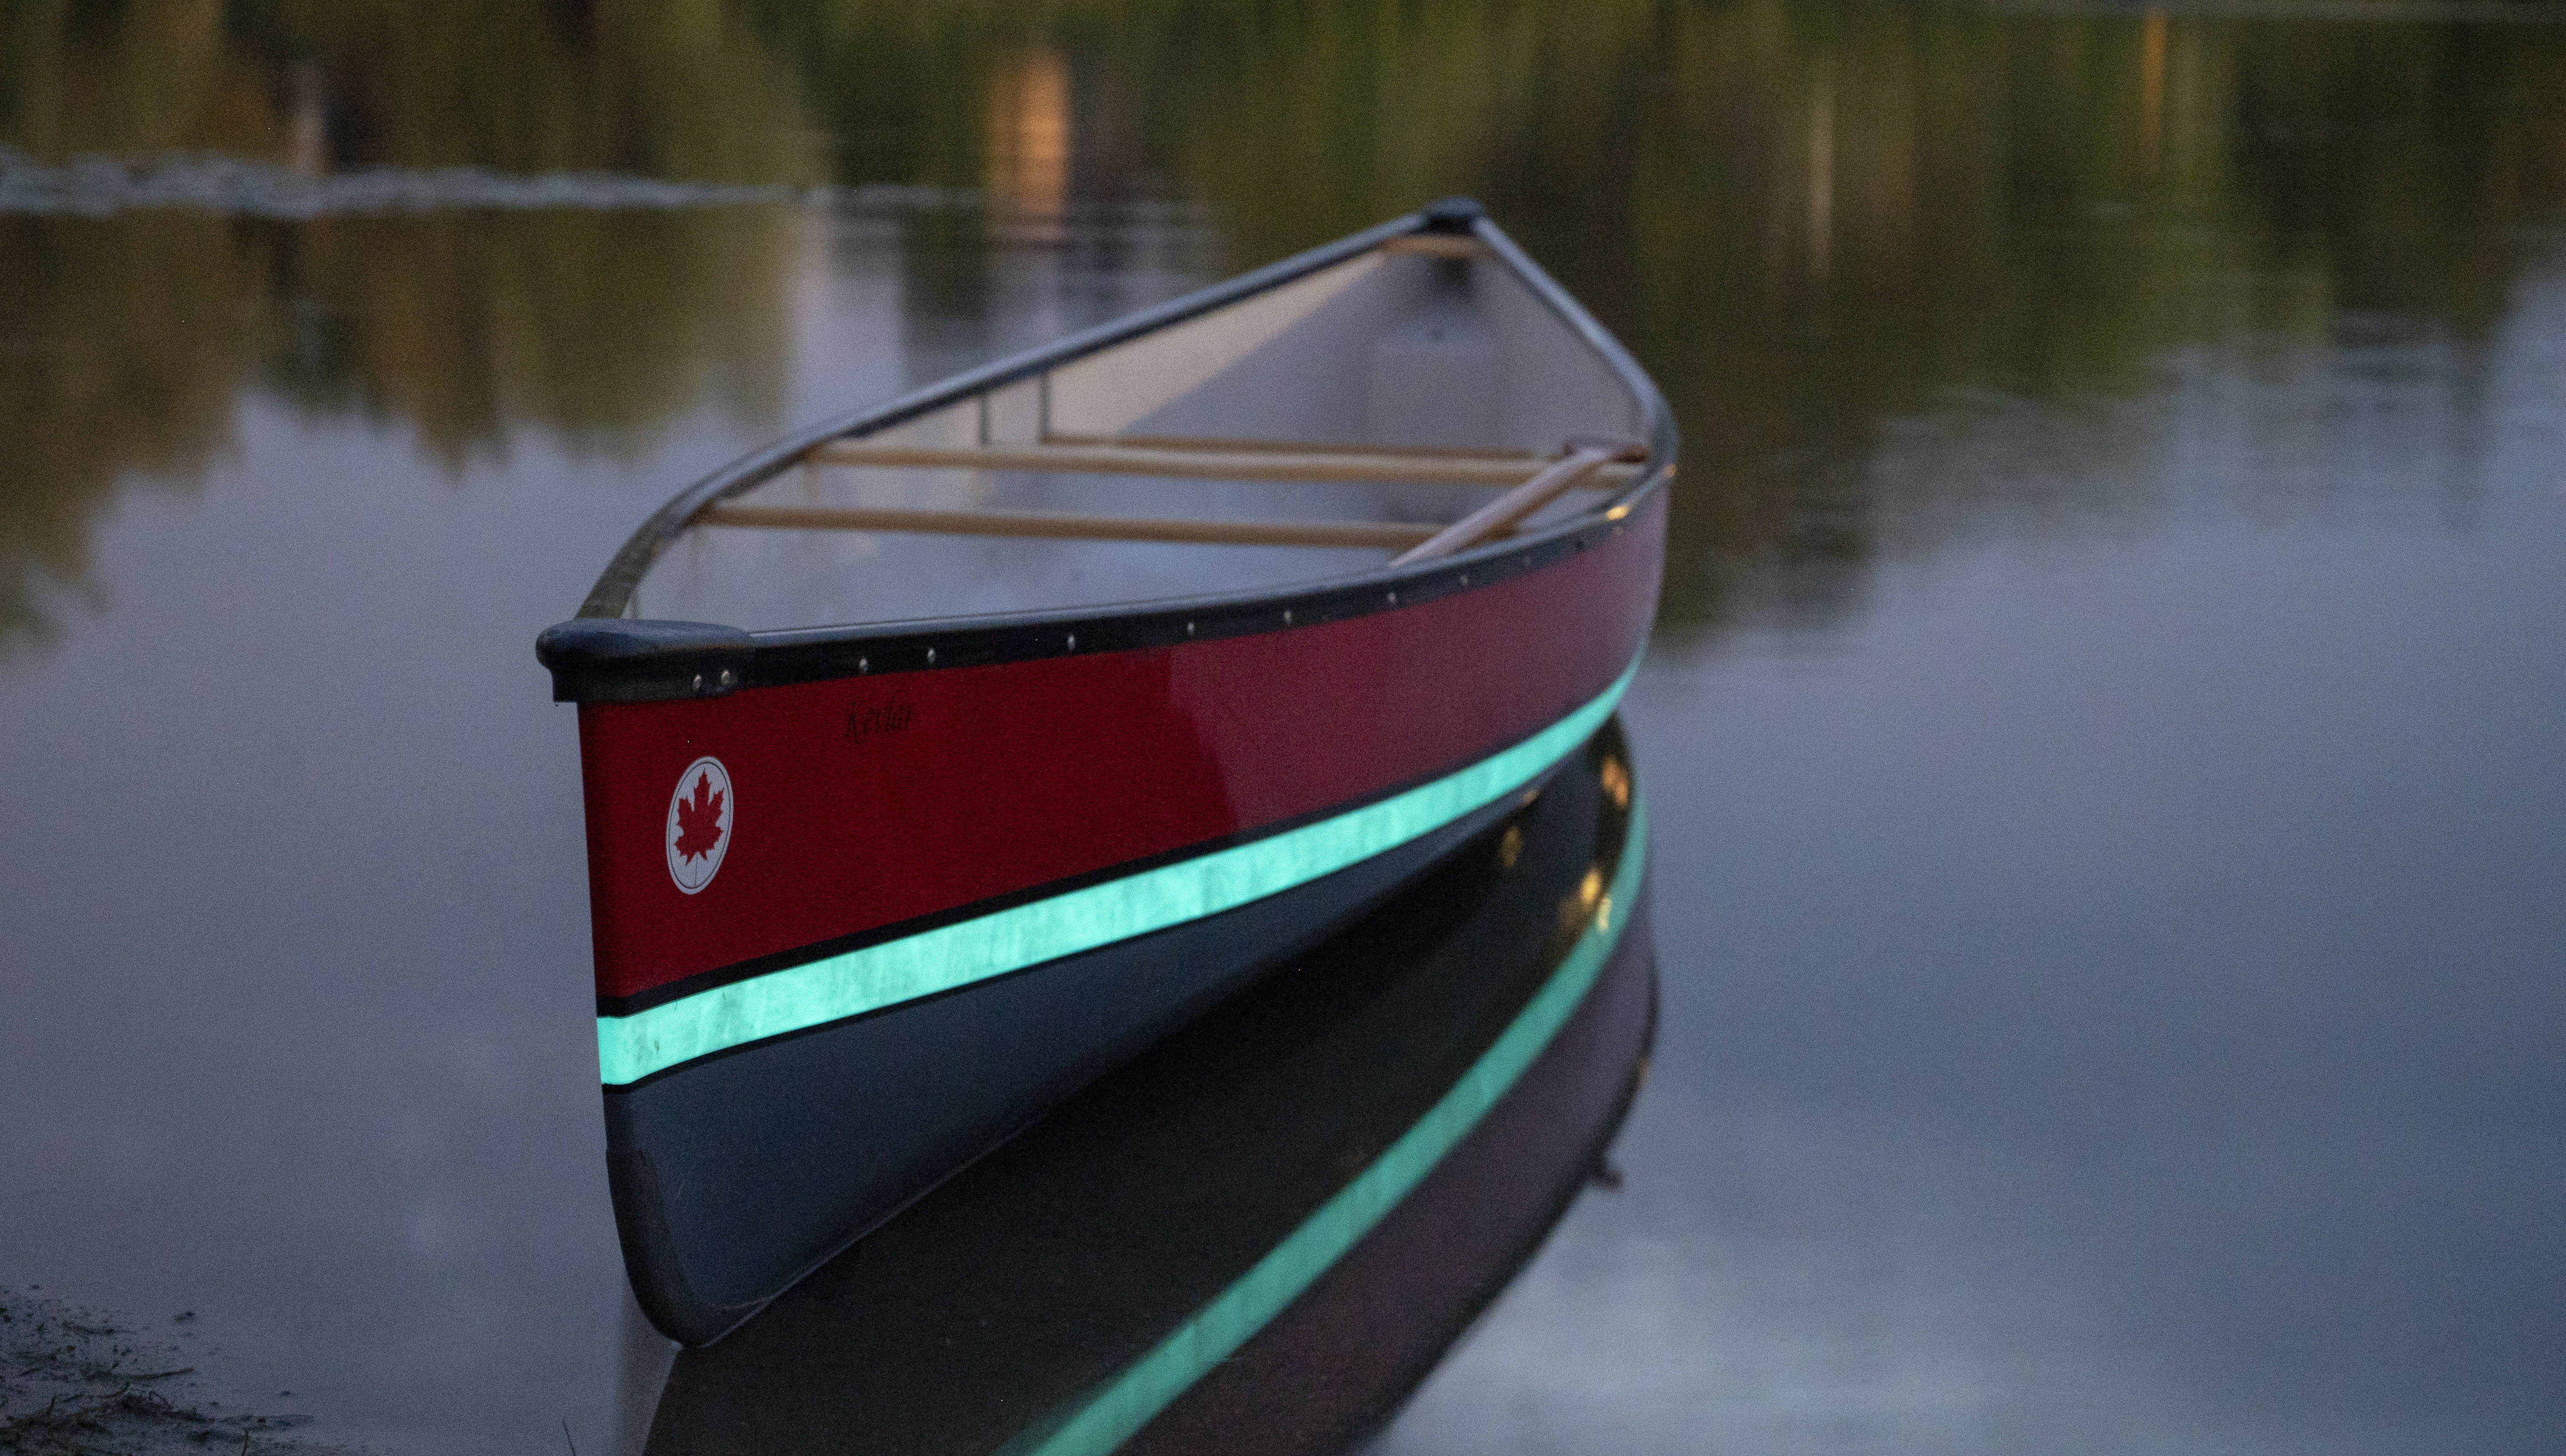 Naomi, the Creative Director paddling in a glowing canoe on dark waters